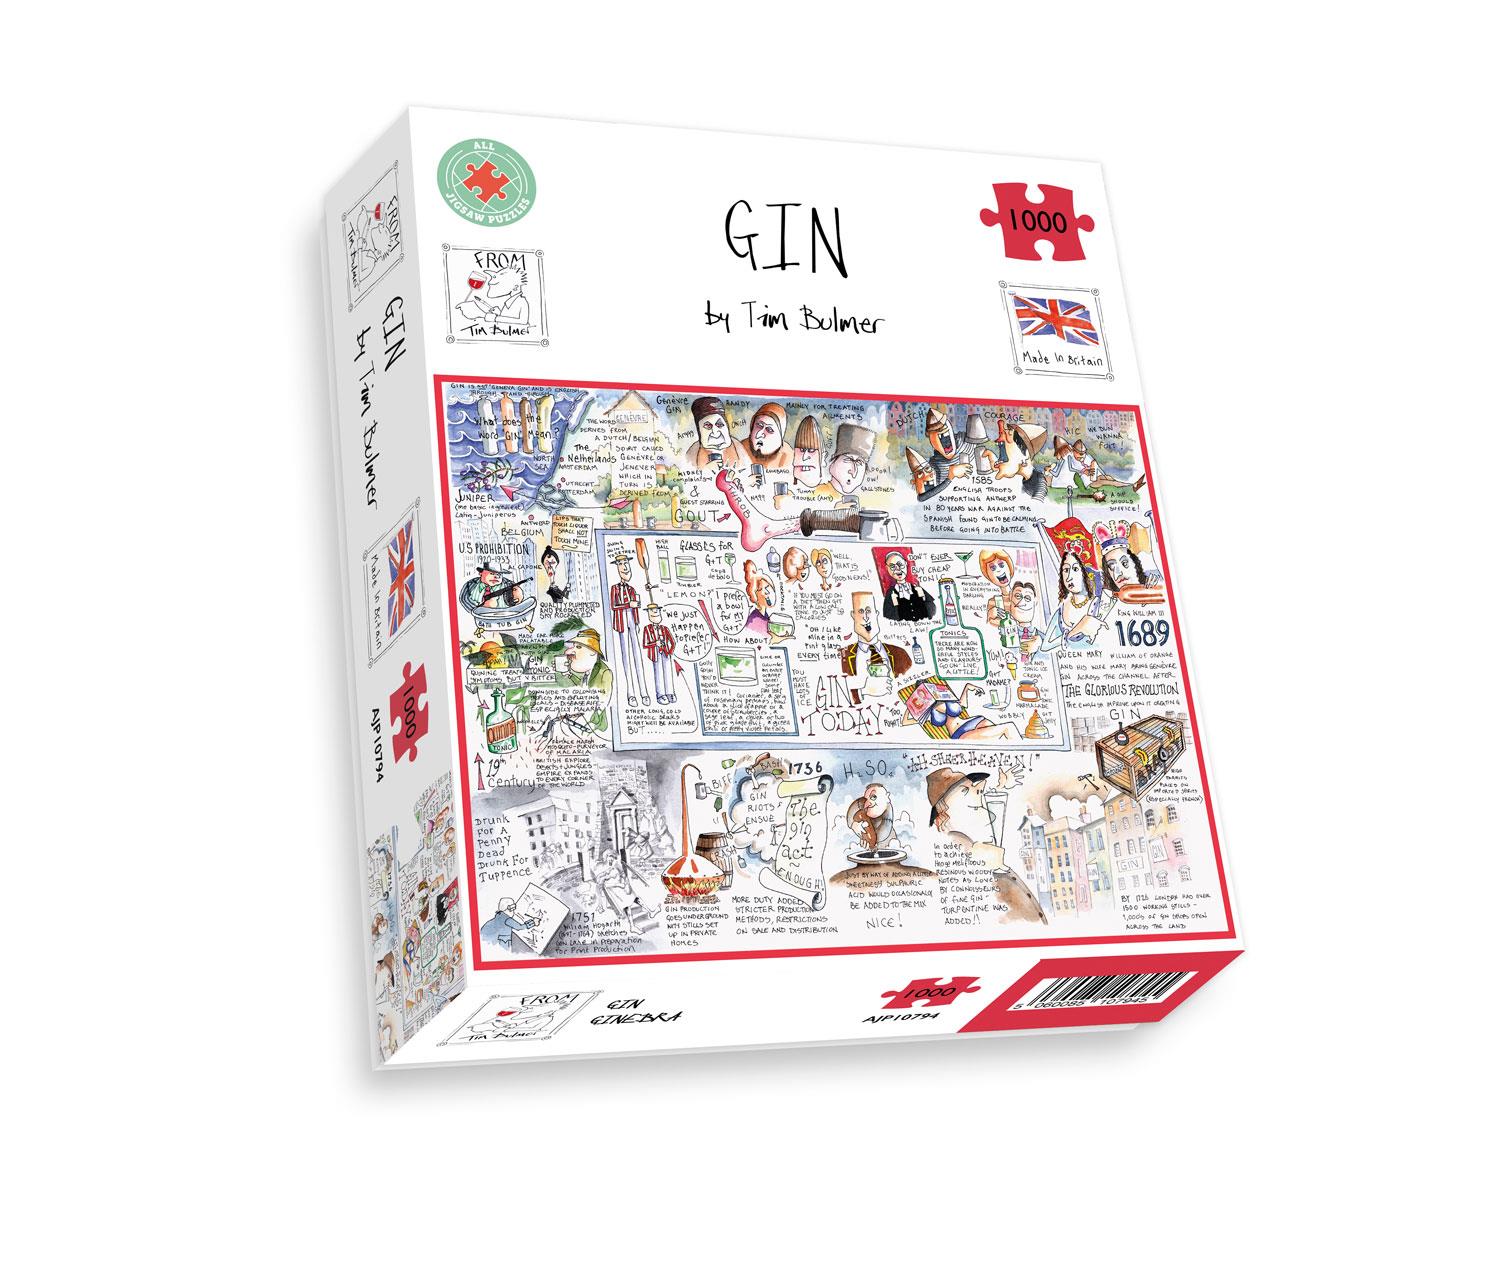 Gin - Tim Bulmer Jigsaw Puzzle (1000 Pieces)